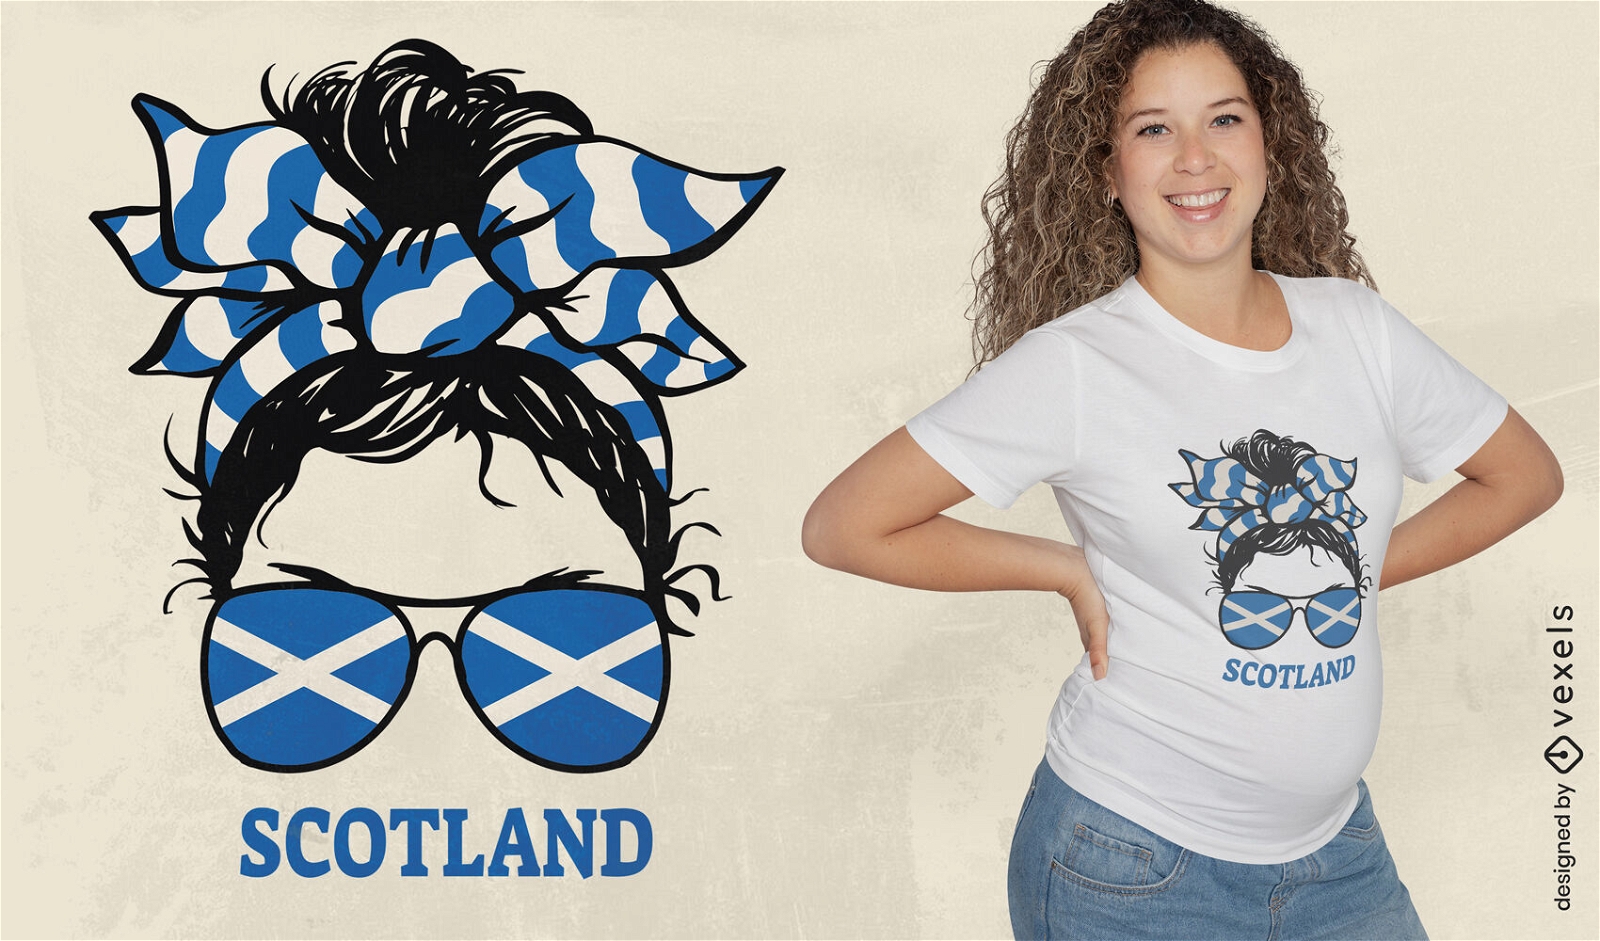 Scotland glasses woman t-shirt design